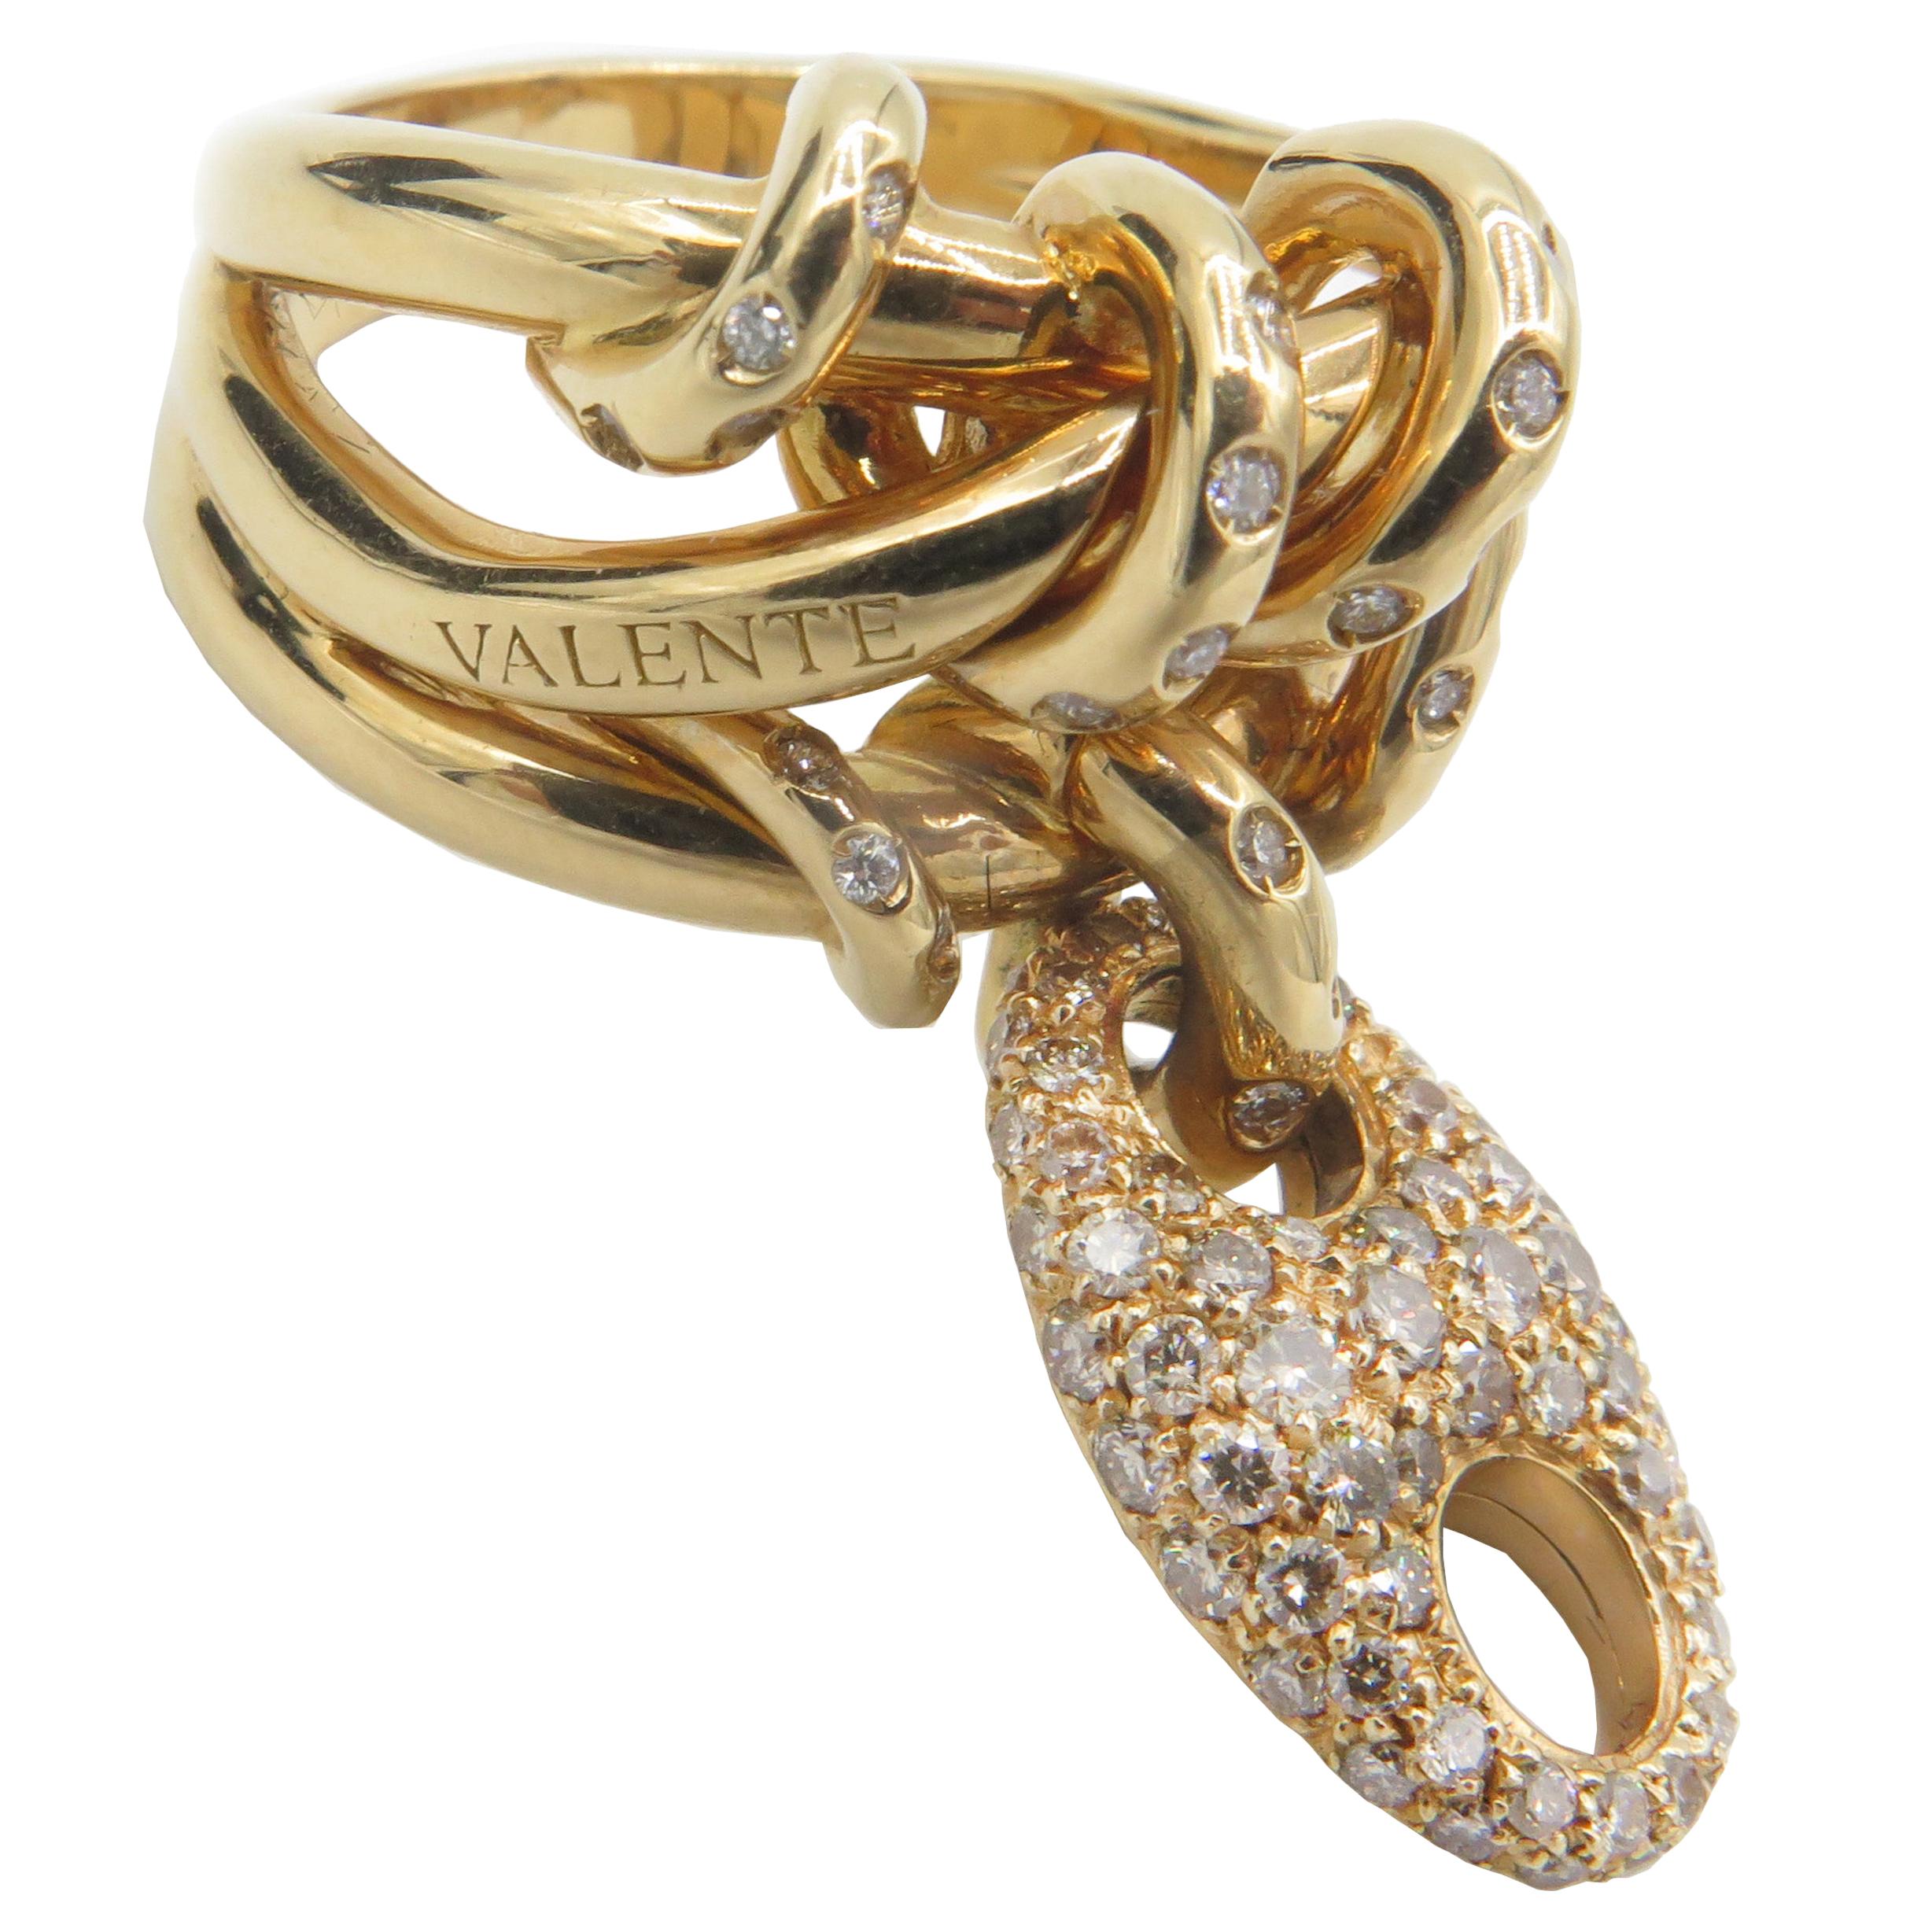 Valente Milano 18 Karat Yellow Gold and Diamond Ring by John Galliano For Sale